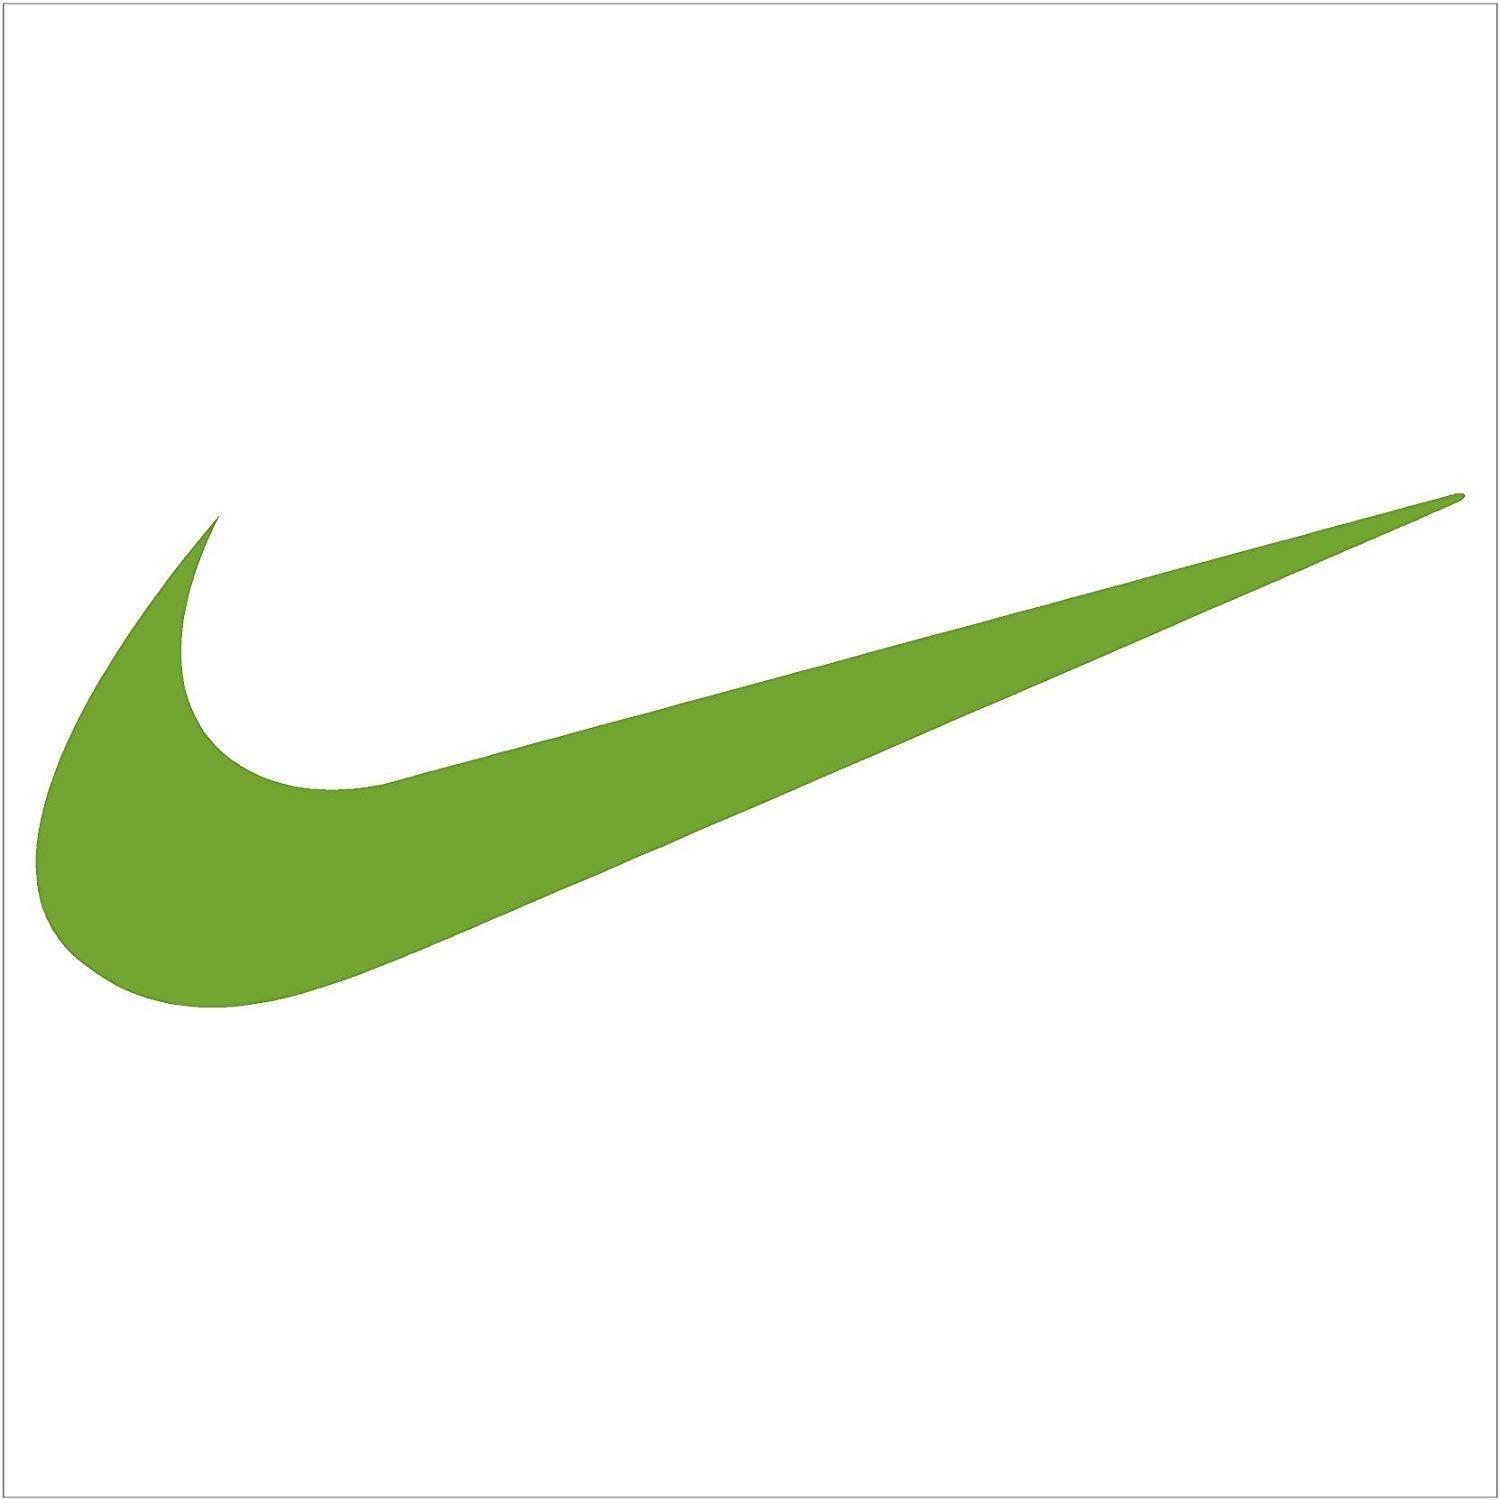 Nike Swoosh Logo - Amazon.com: Nike Swoosh Logo Vinyl Sticker Decal Lime Green 4 Inch ...